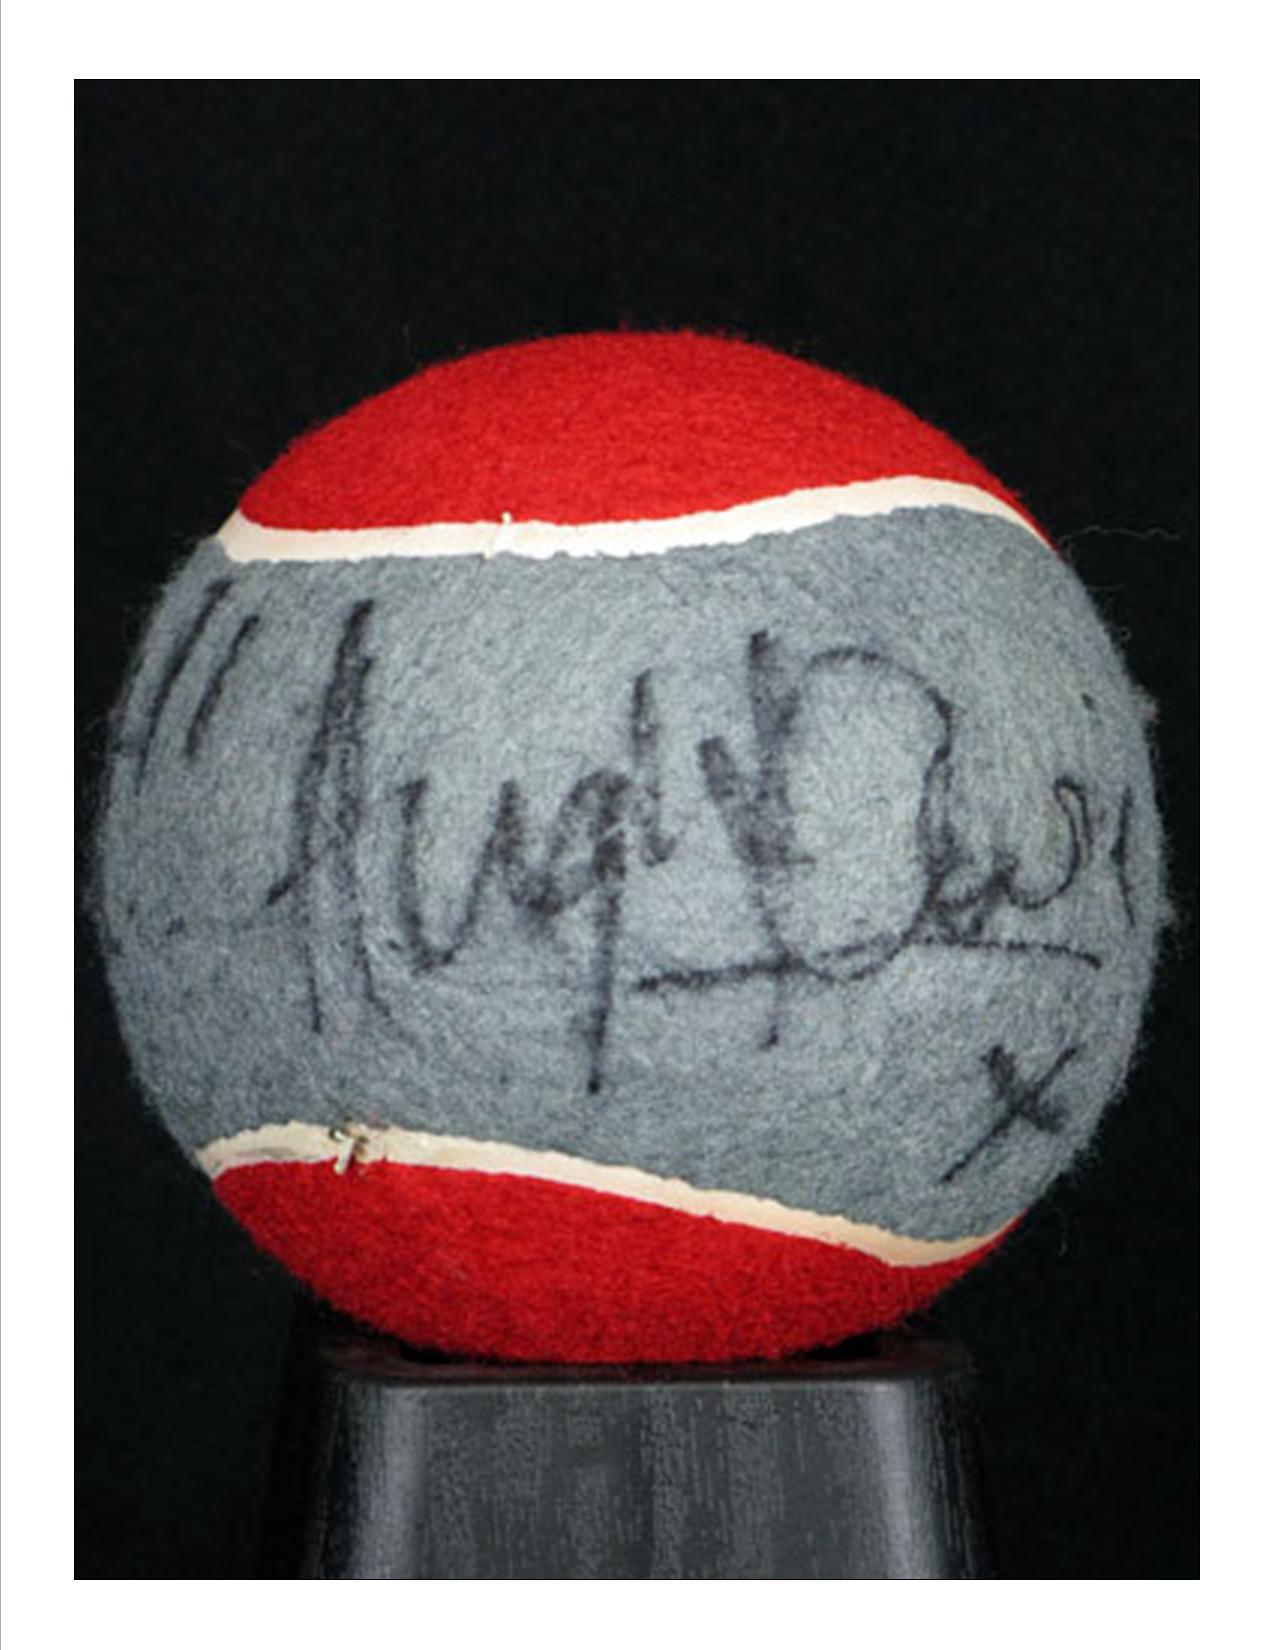 Hugh autographs House tennis ball